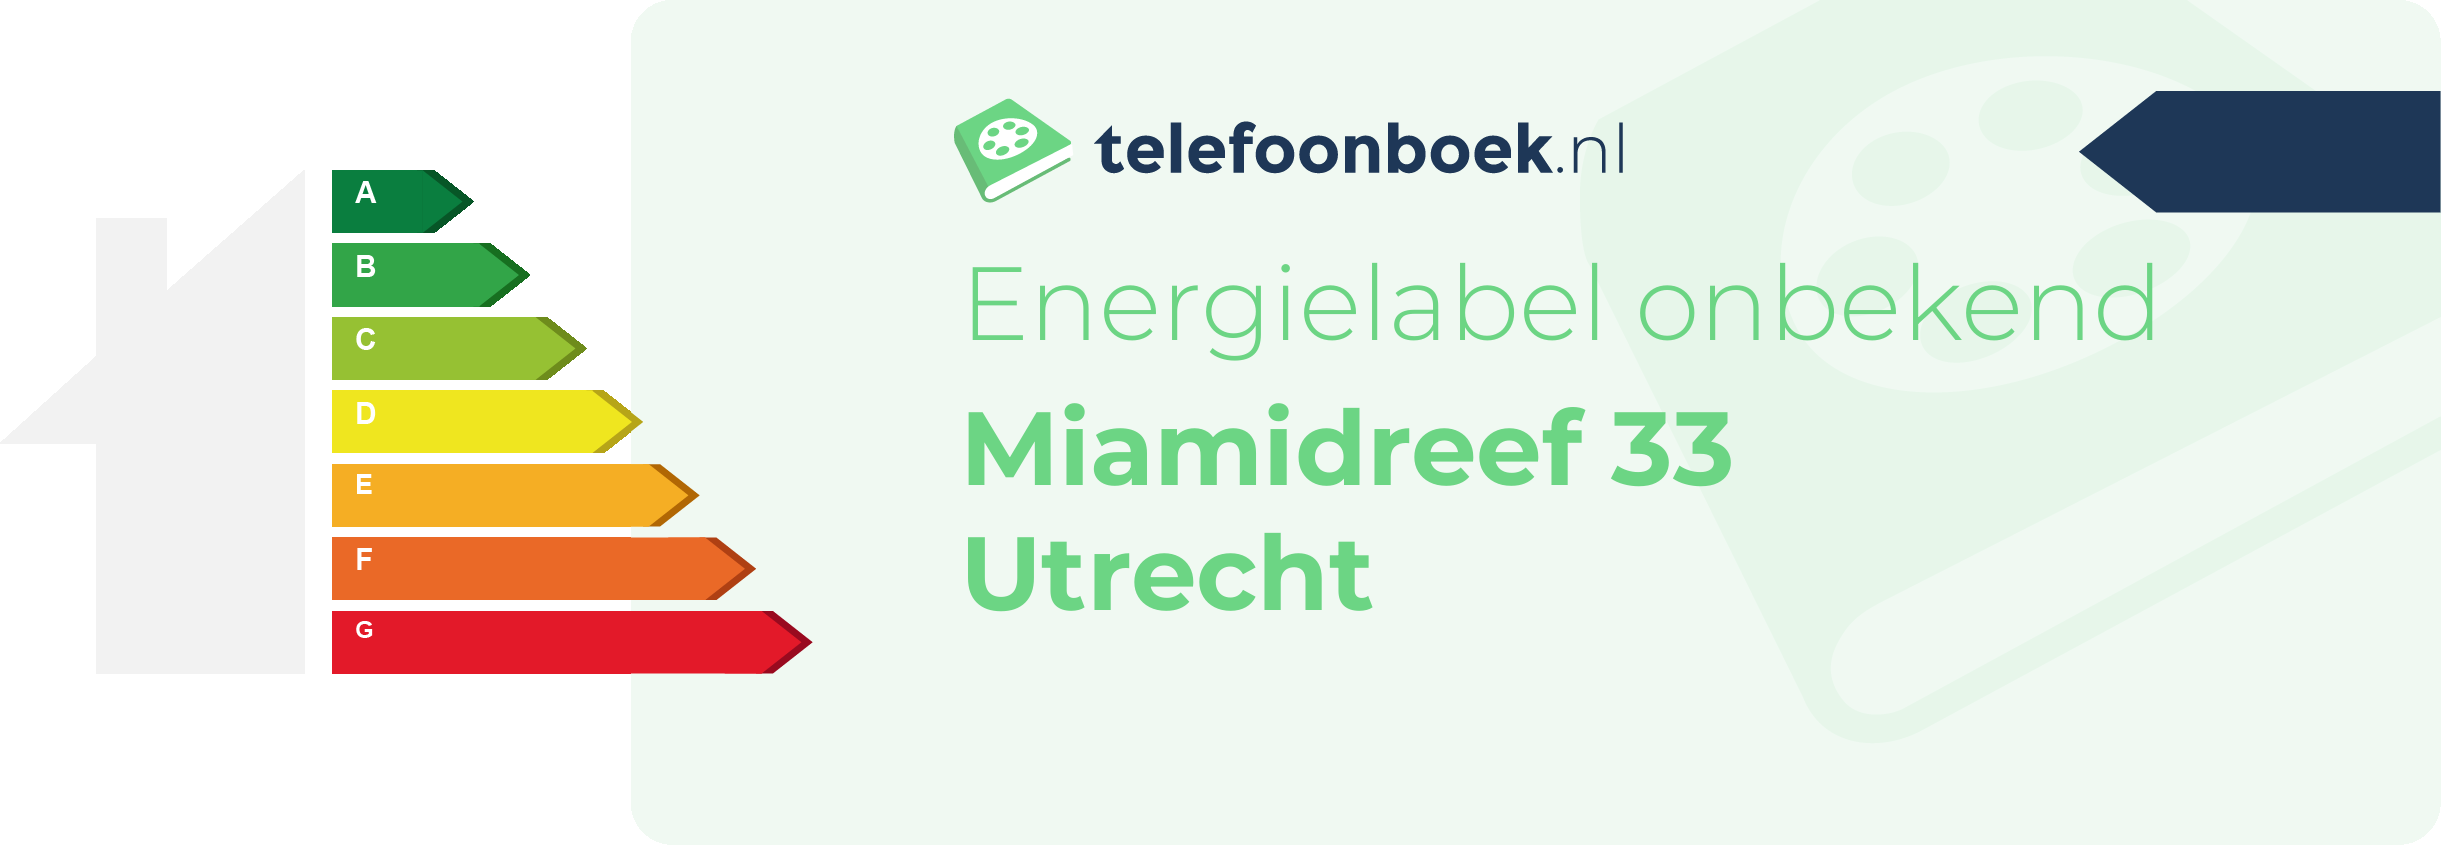 Energielabel Miamidreef 33 Utrecht